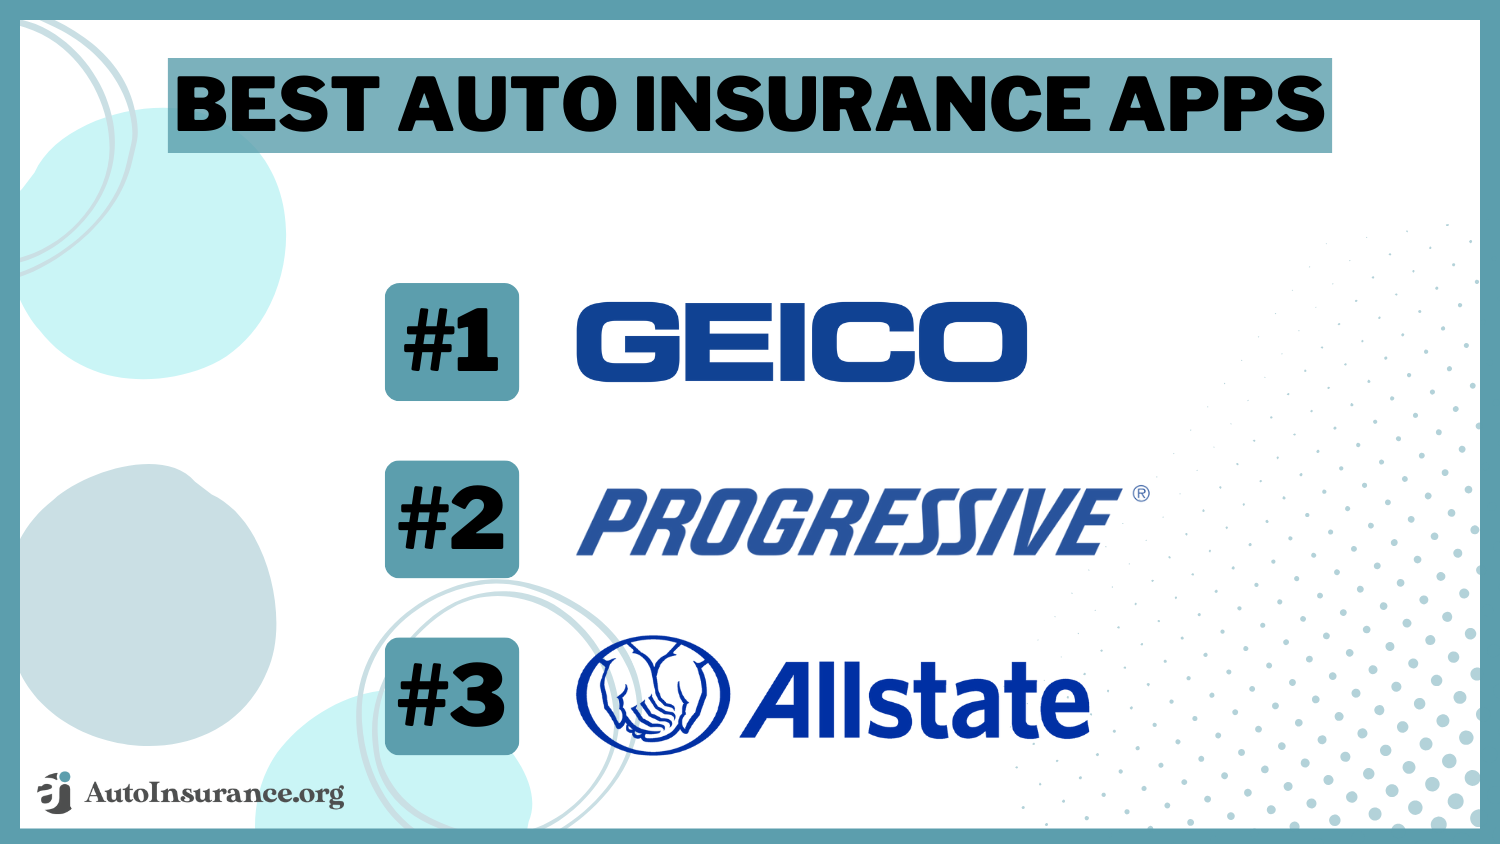 Geico, Progressive, Allstate: Best Auto Insurance Apps